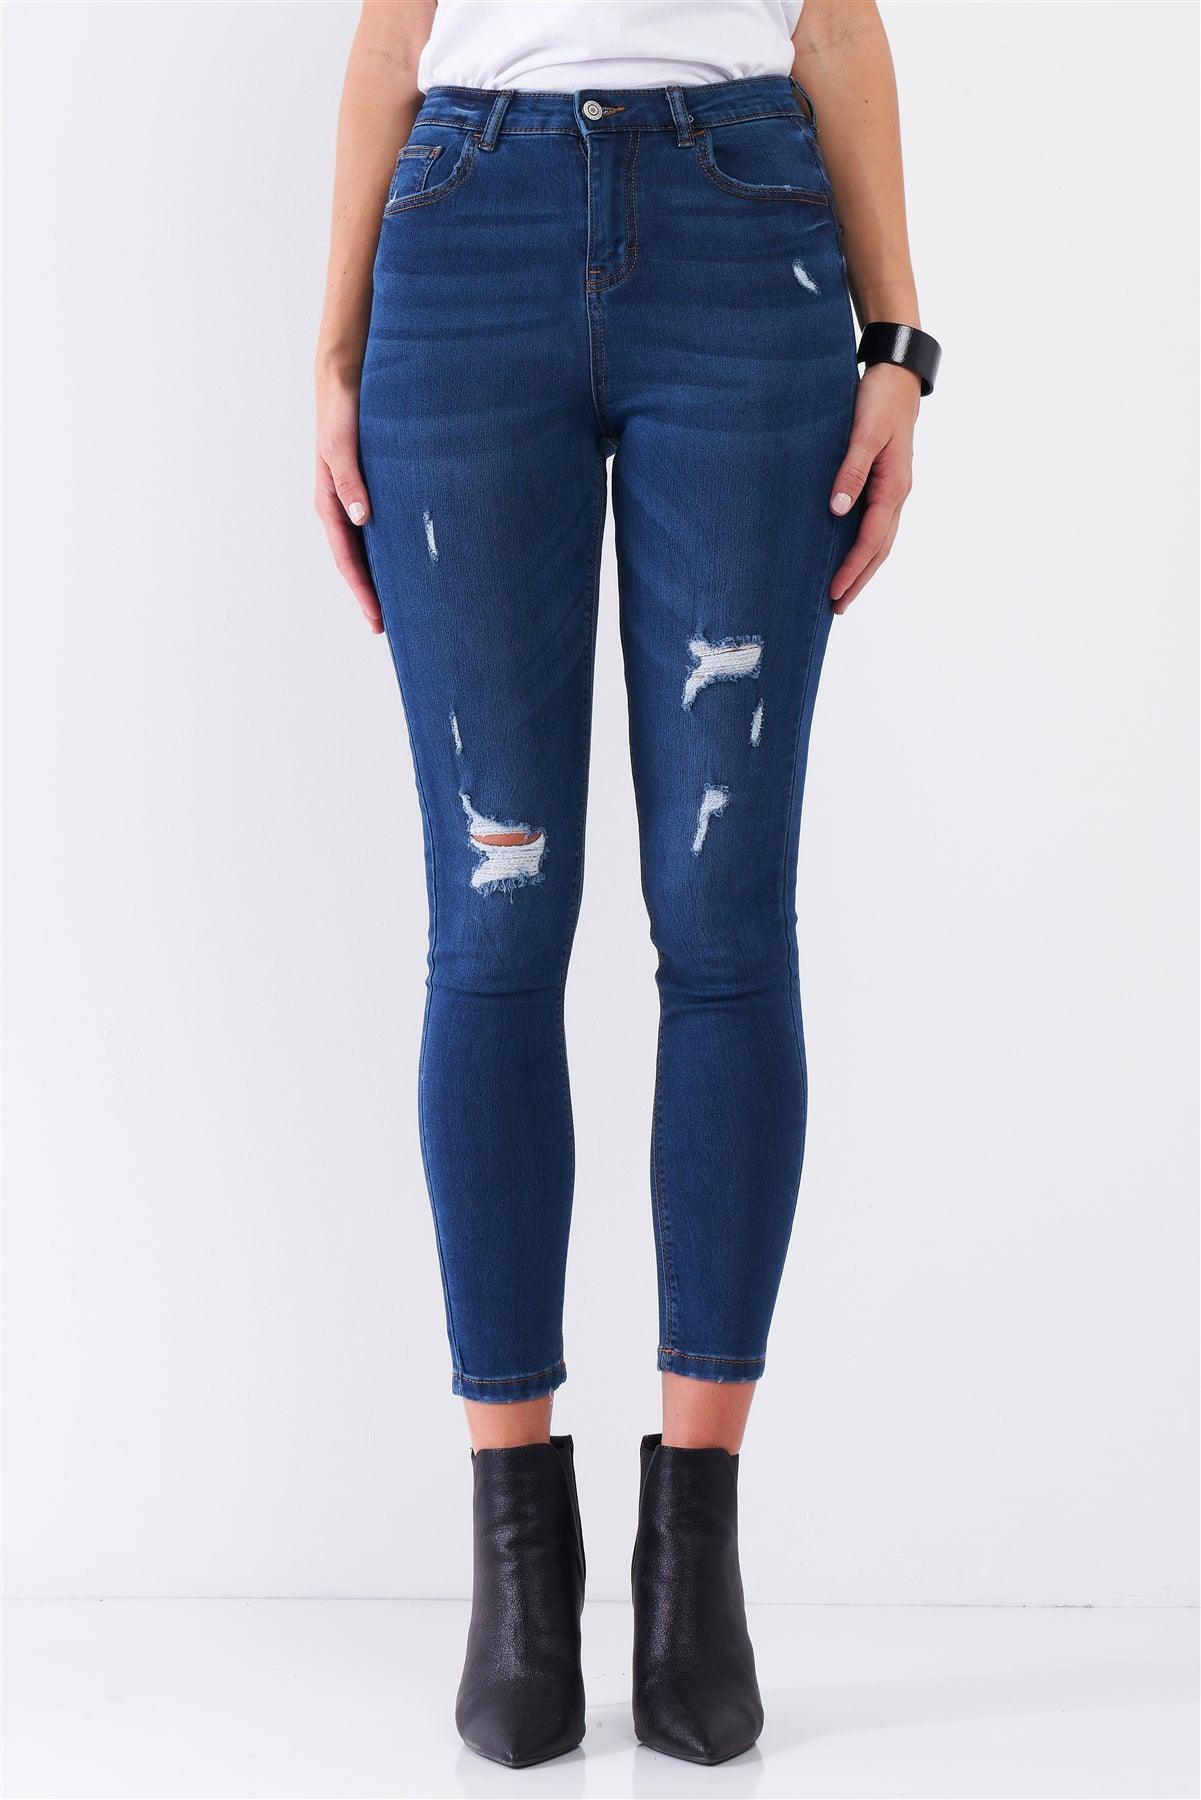 Medium Blue Denim High-Waisted Ripped Vintage Skinny Jeans /1-2-1-2-2-2-1